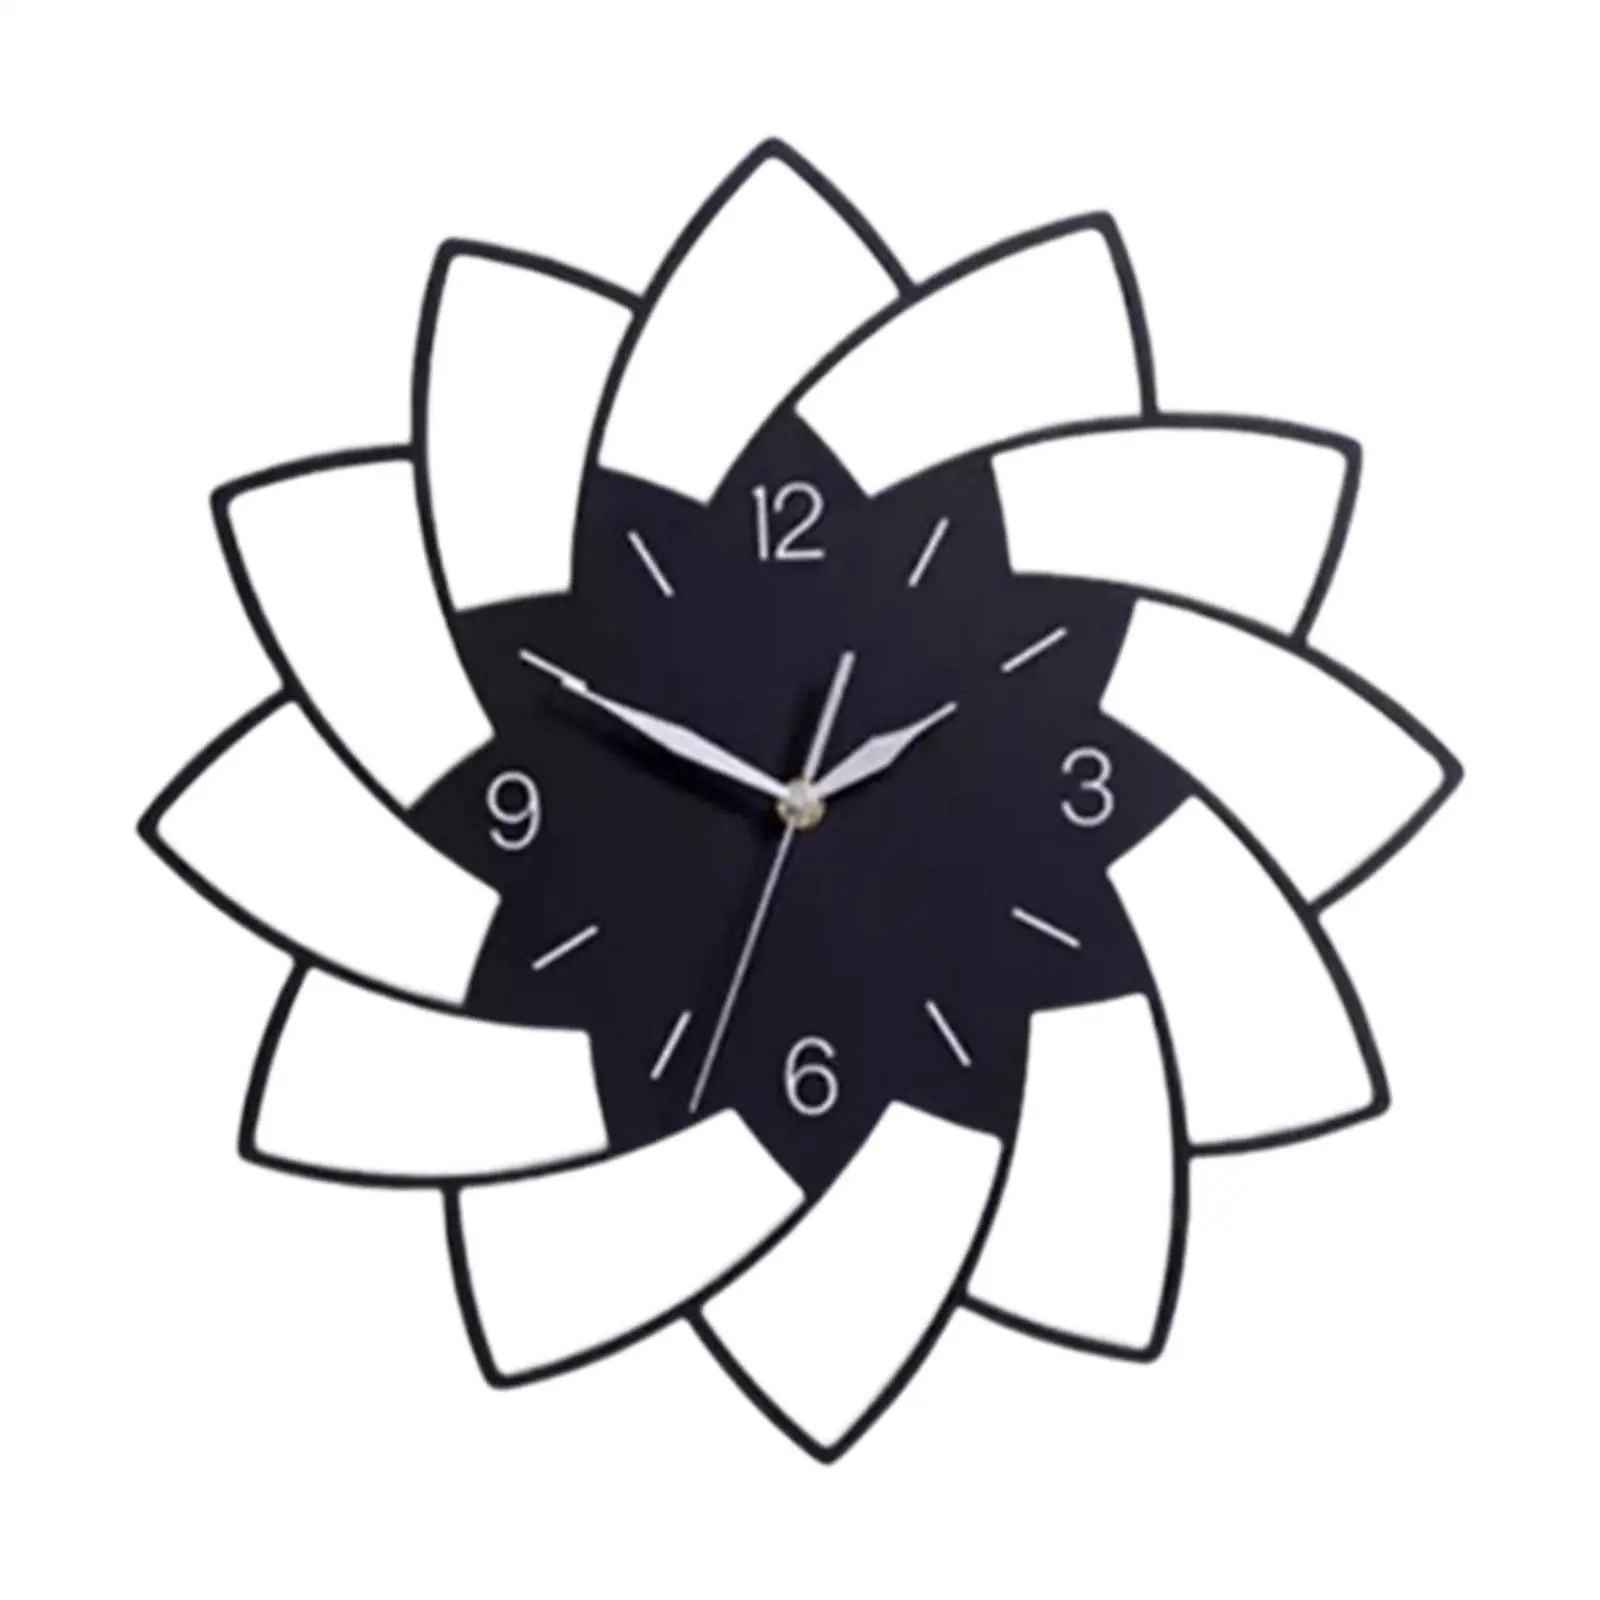 Acrylic Wall Clock Decorative Clocks Modern Silent Flower Shaped Hanging Clock